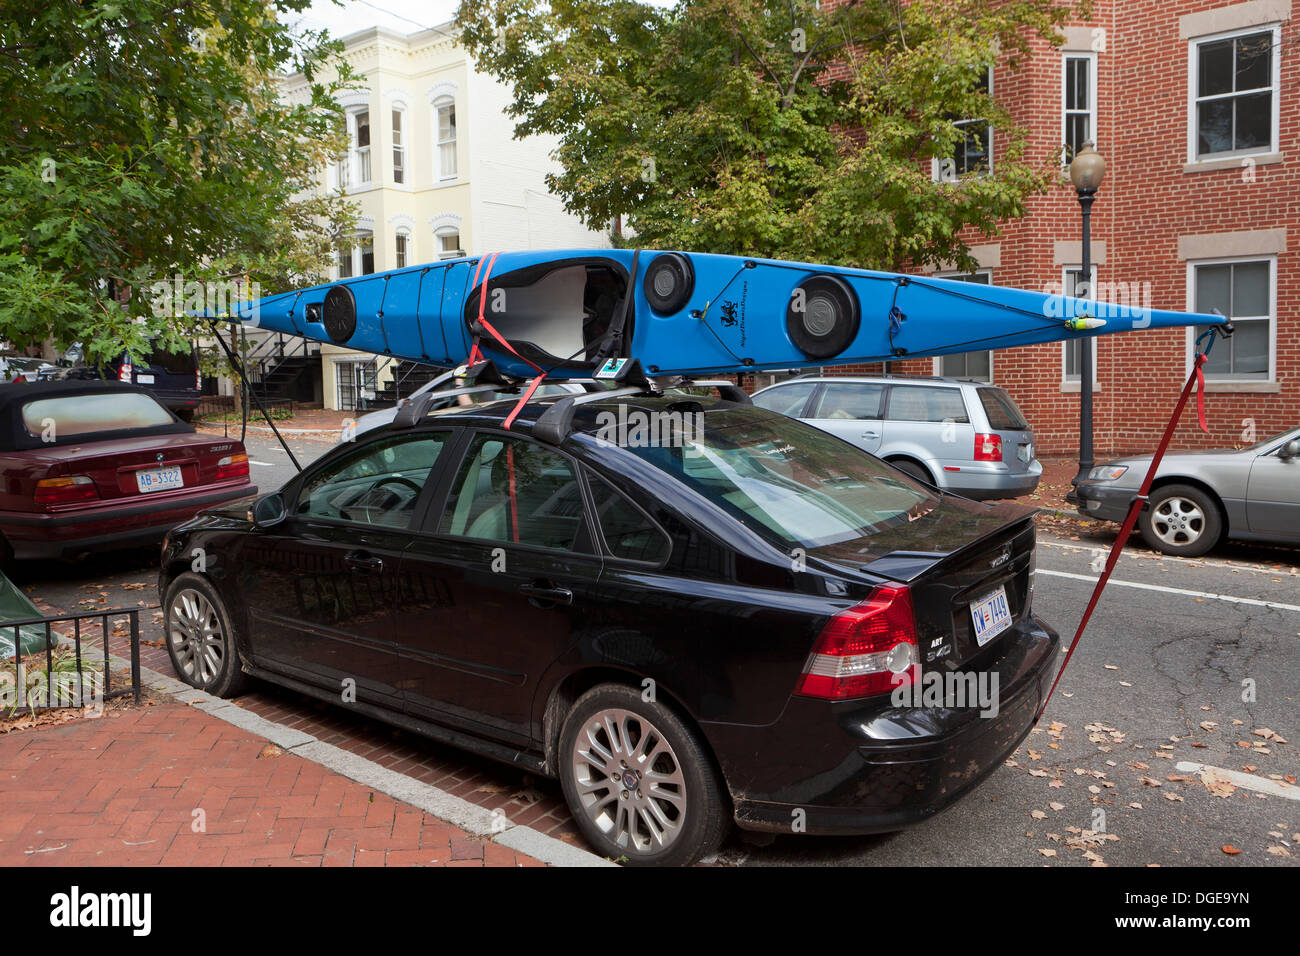 Kajak auf dem Auto montiert Stockfotografie - Alamy